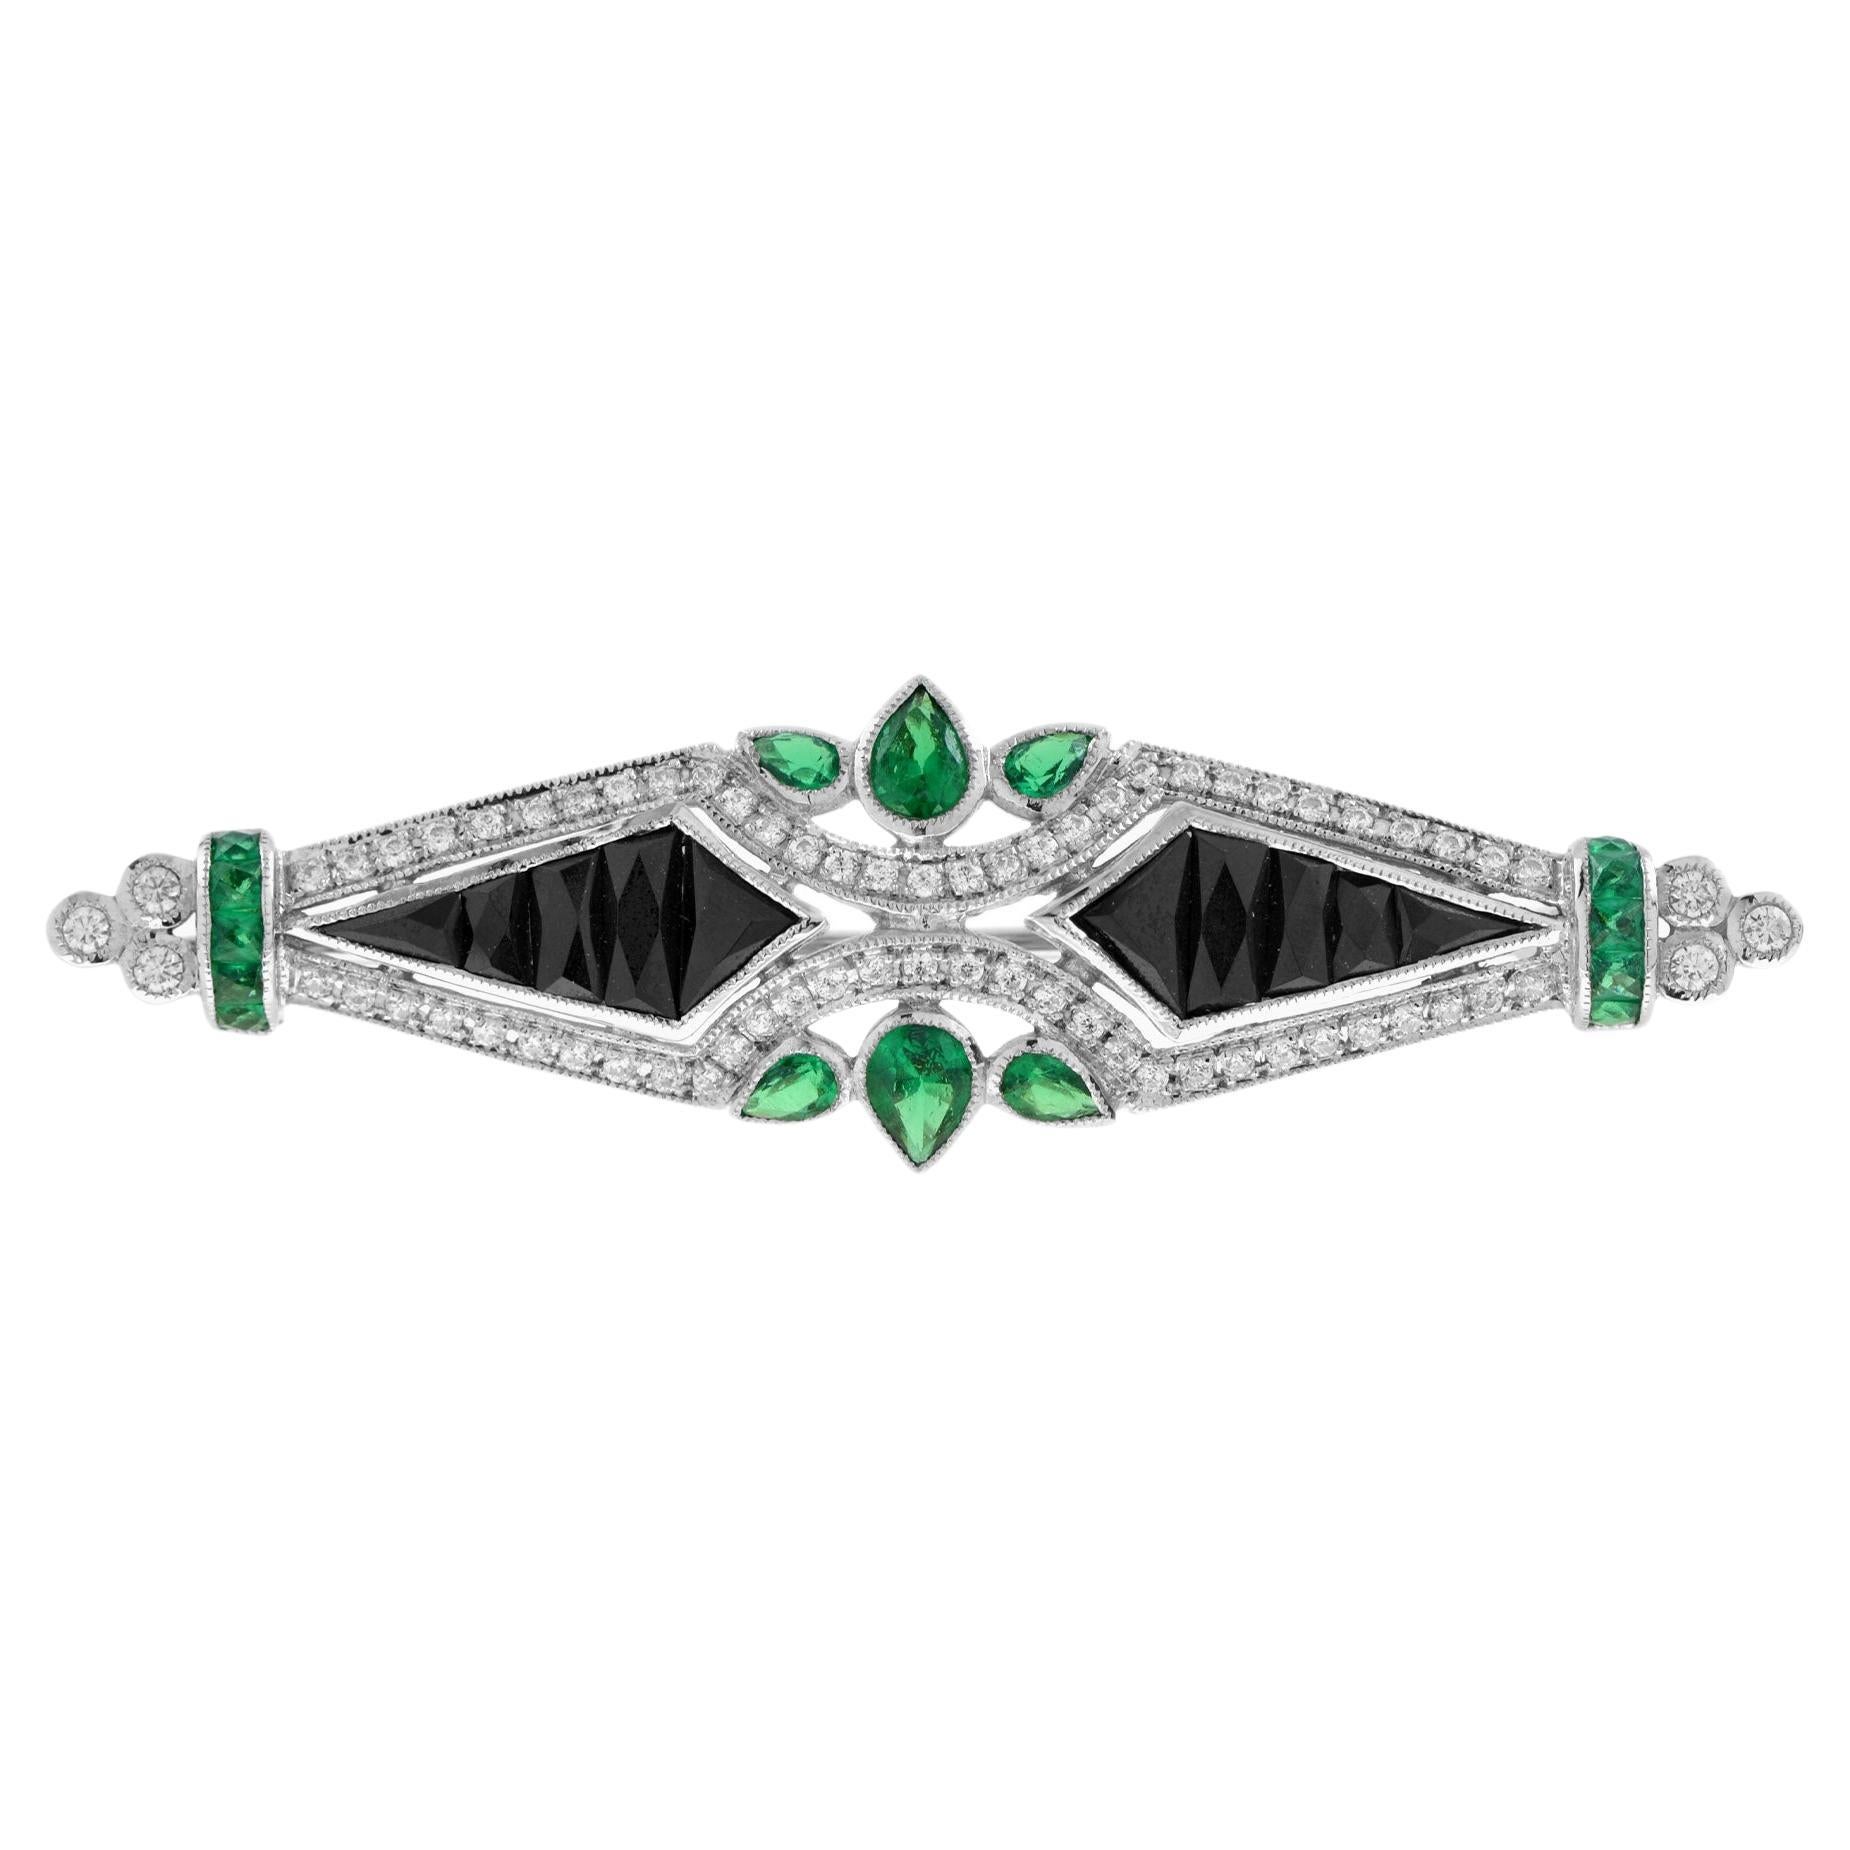 Diamond Emerald Onyx Art Deco Style Brooch in 14K White Gold